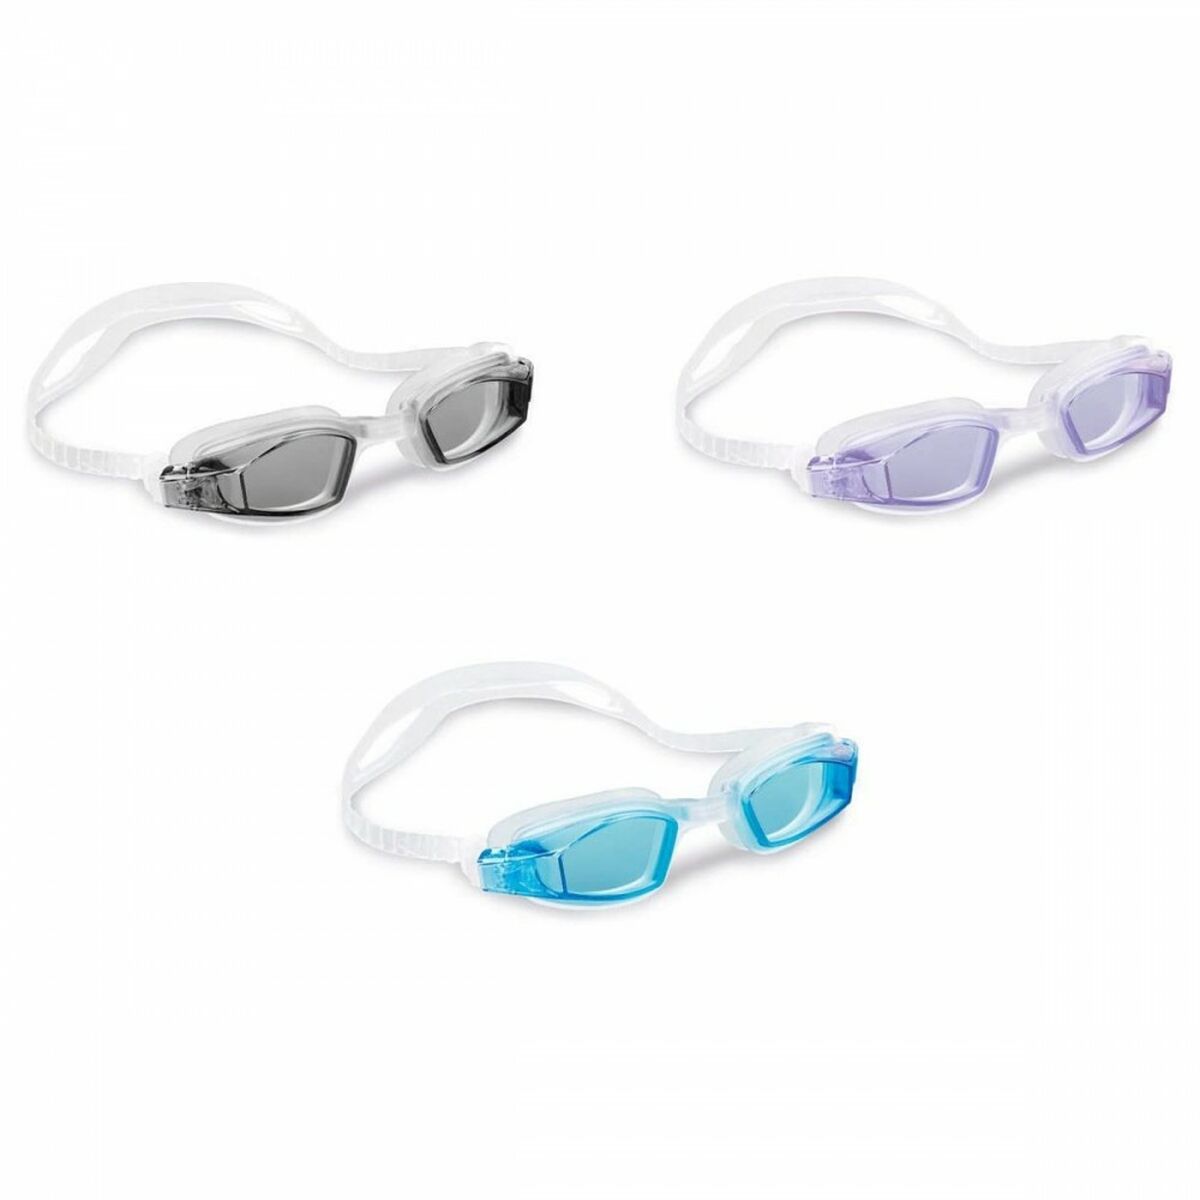 Children's Swimming Goggles Intex Free Style (12 Units)